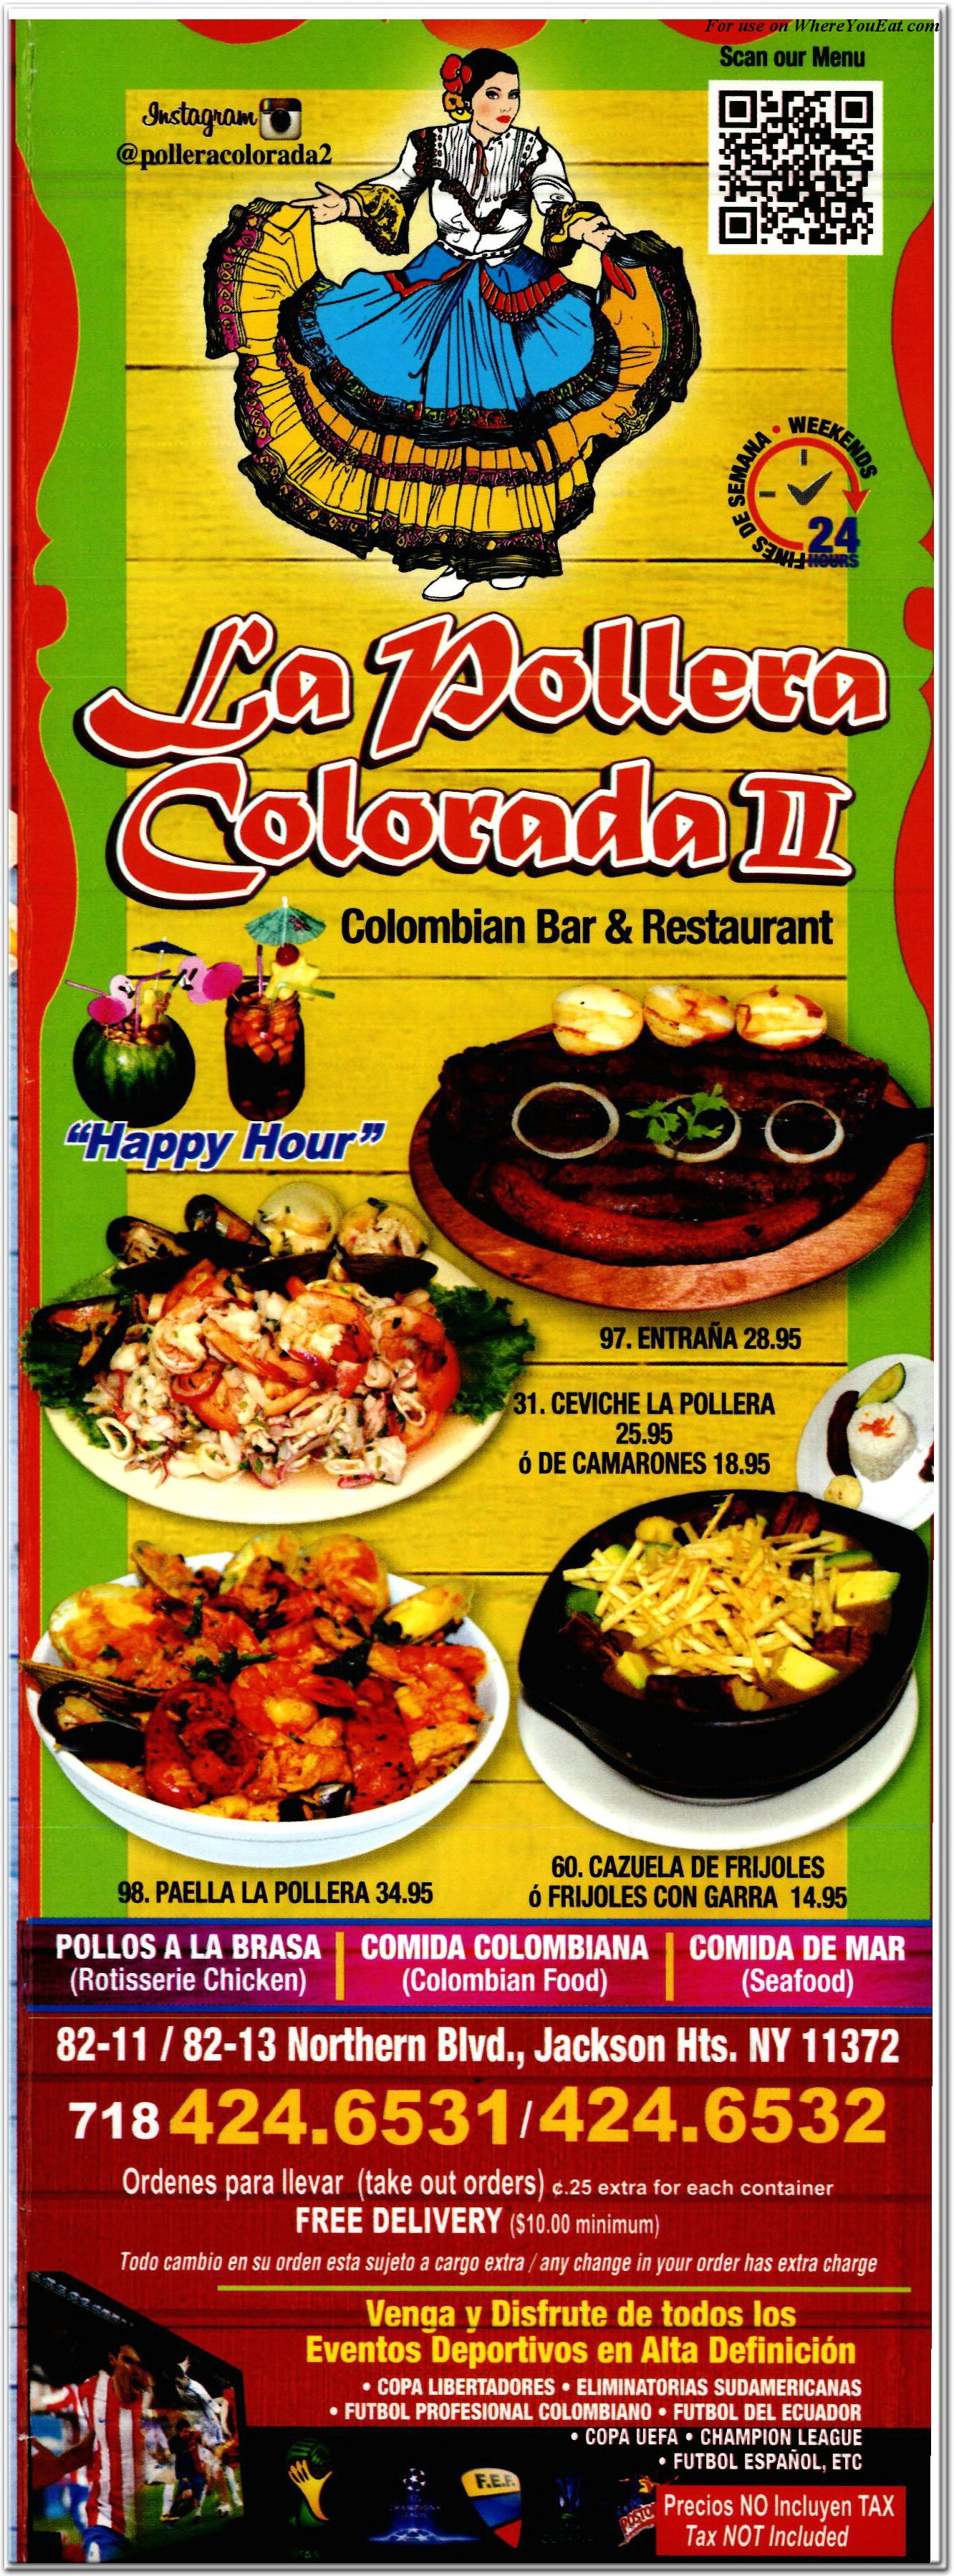 La Pollera Colorada II Restaurant in